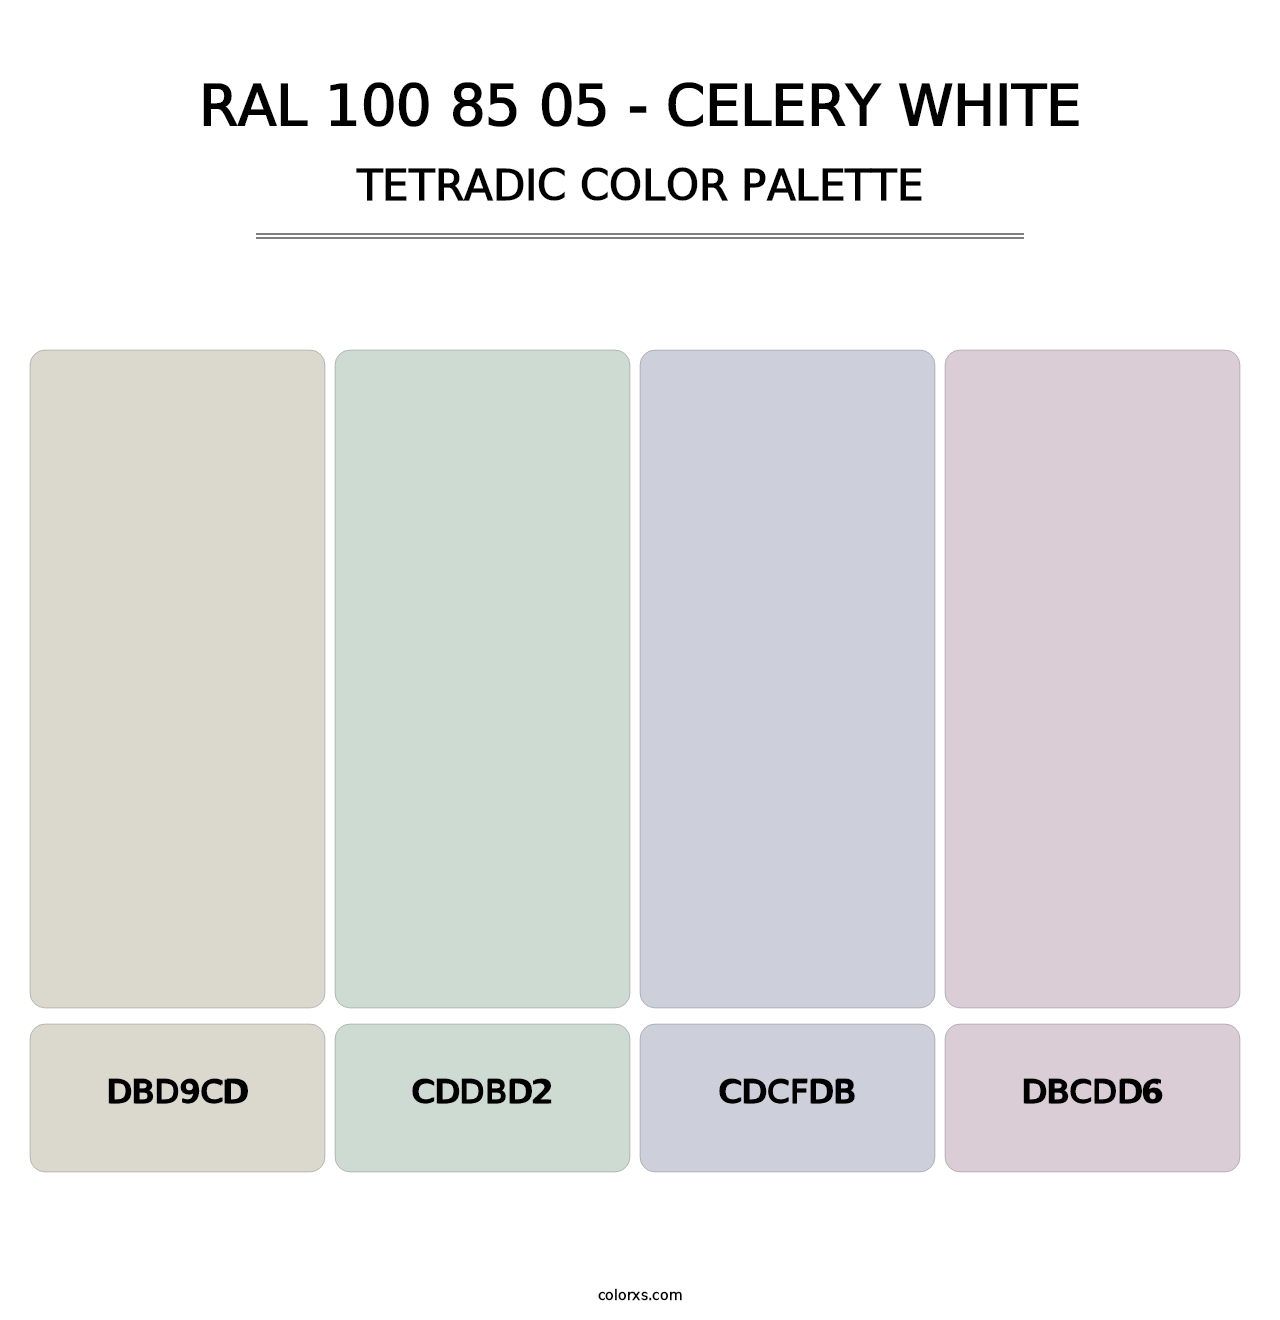 RAL 100 85 05 - Celery White - Tetradic Color Palette